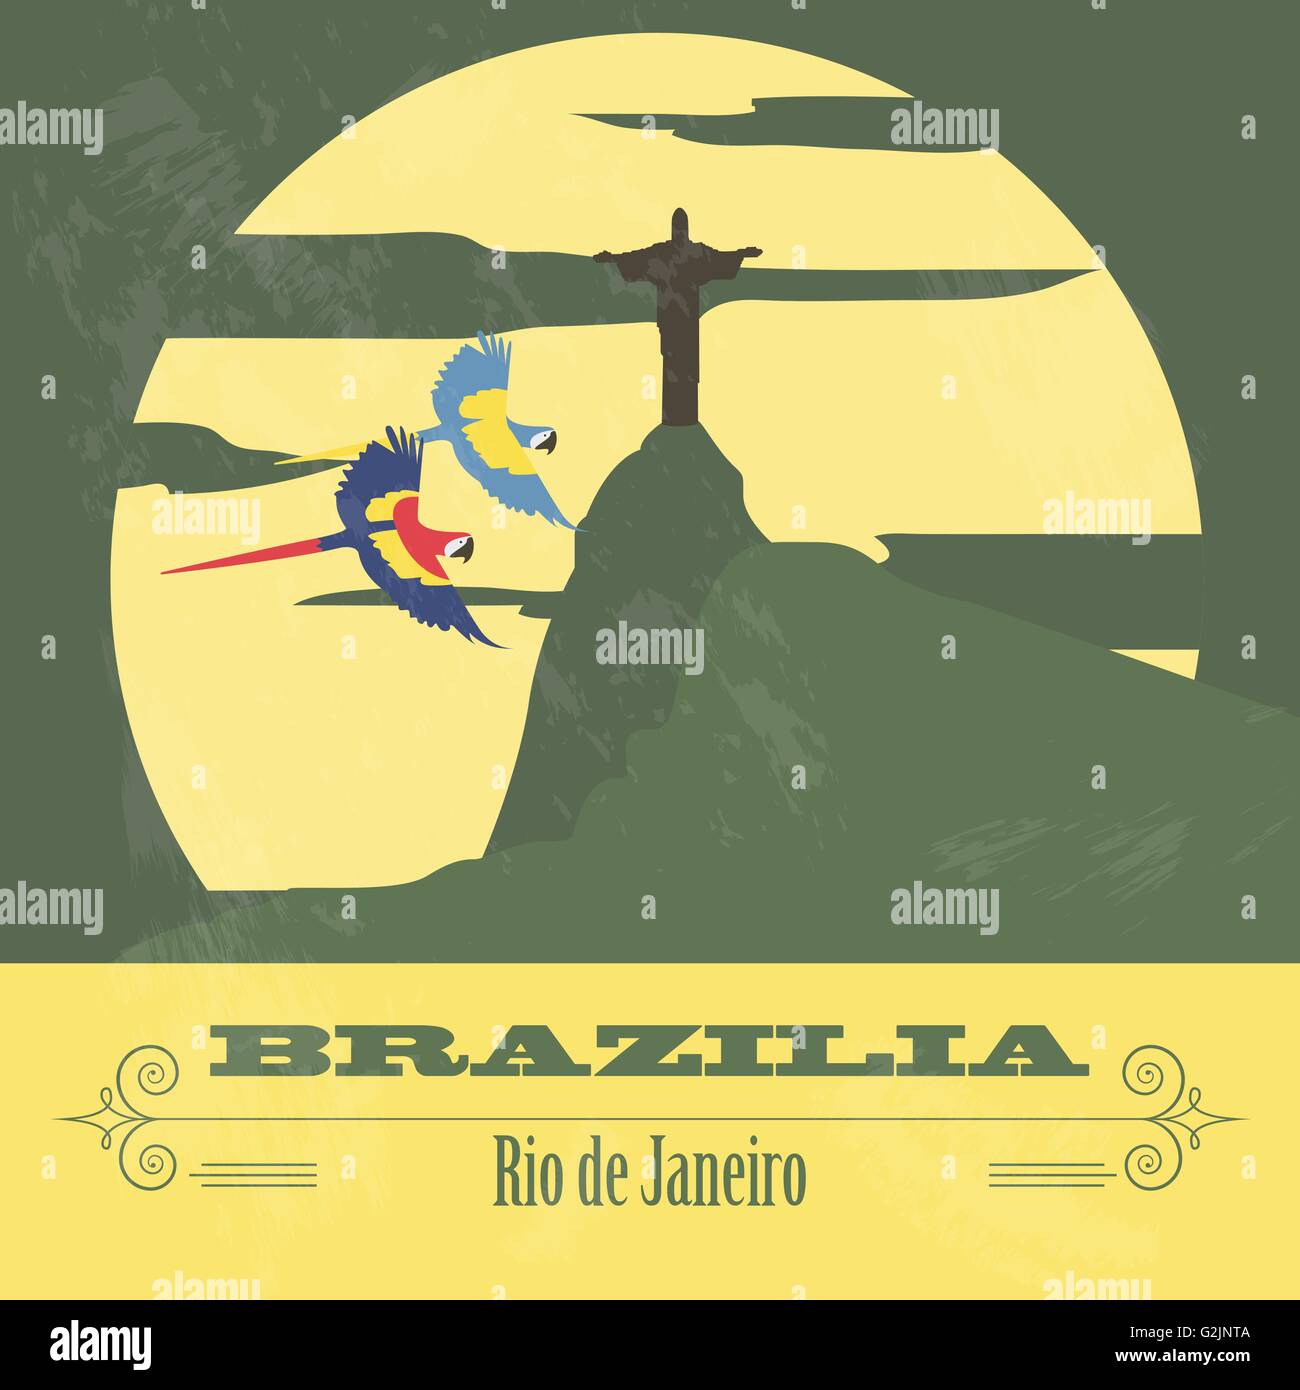 Brazilia landmarks. Retro styled image. Vector illustration Stock Vector